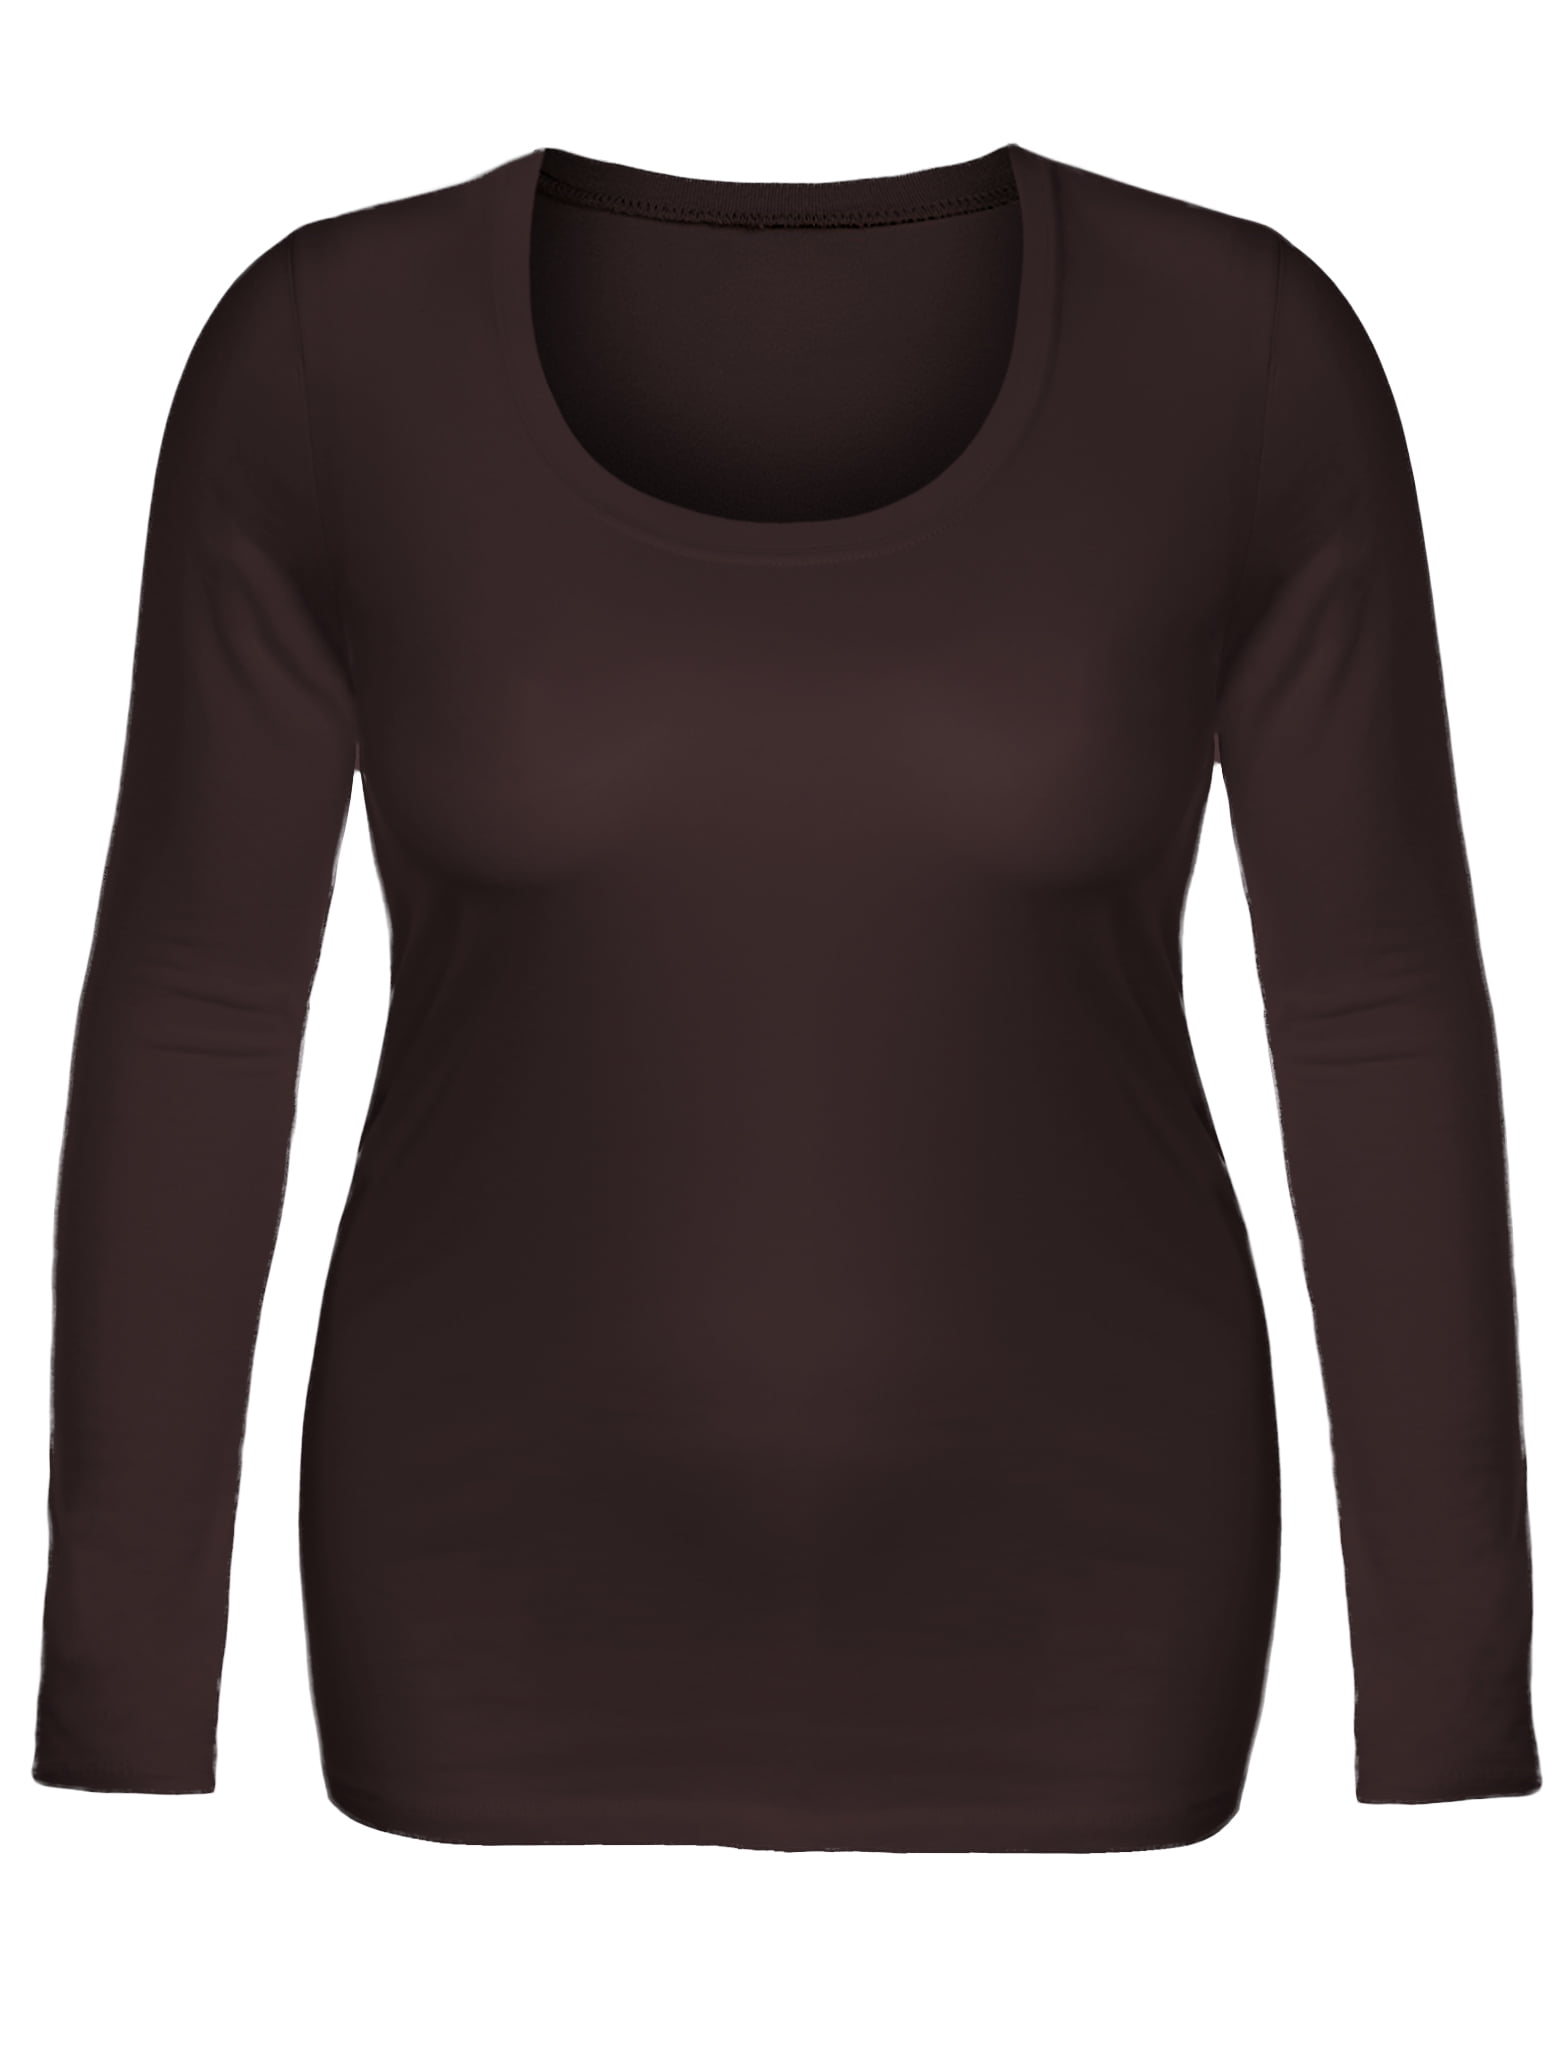 Ved Mount Bank skud Emmalise Women's Plain Basic Scoop Neck Long Sleeve TShirt Tee - Rust, M -  Walmart.com